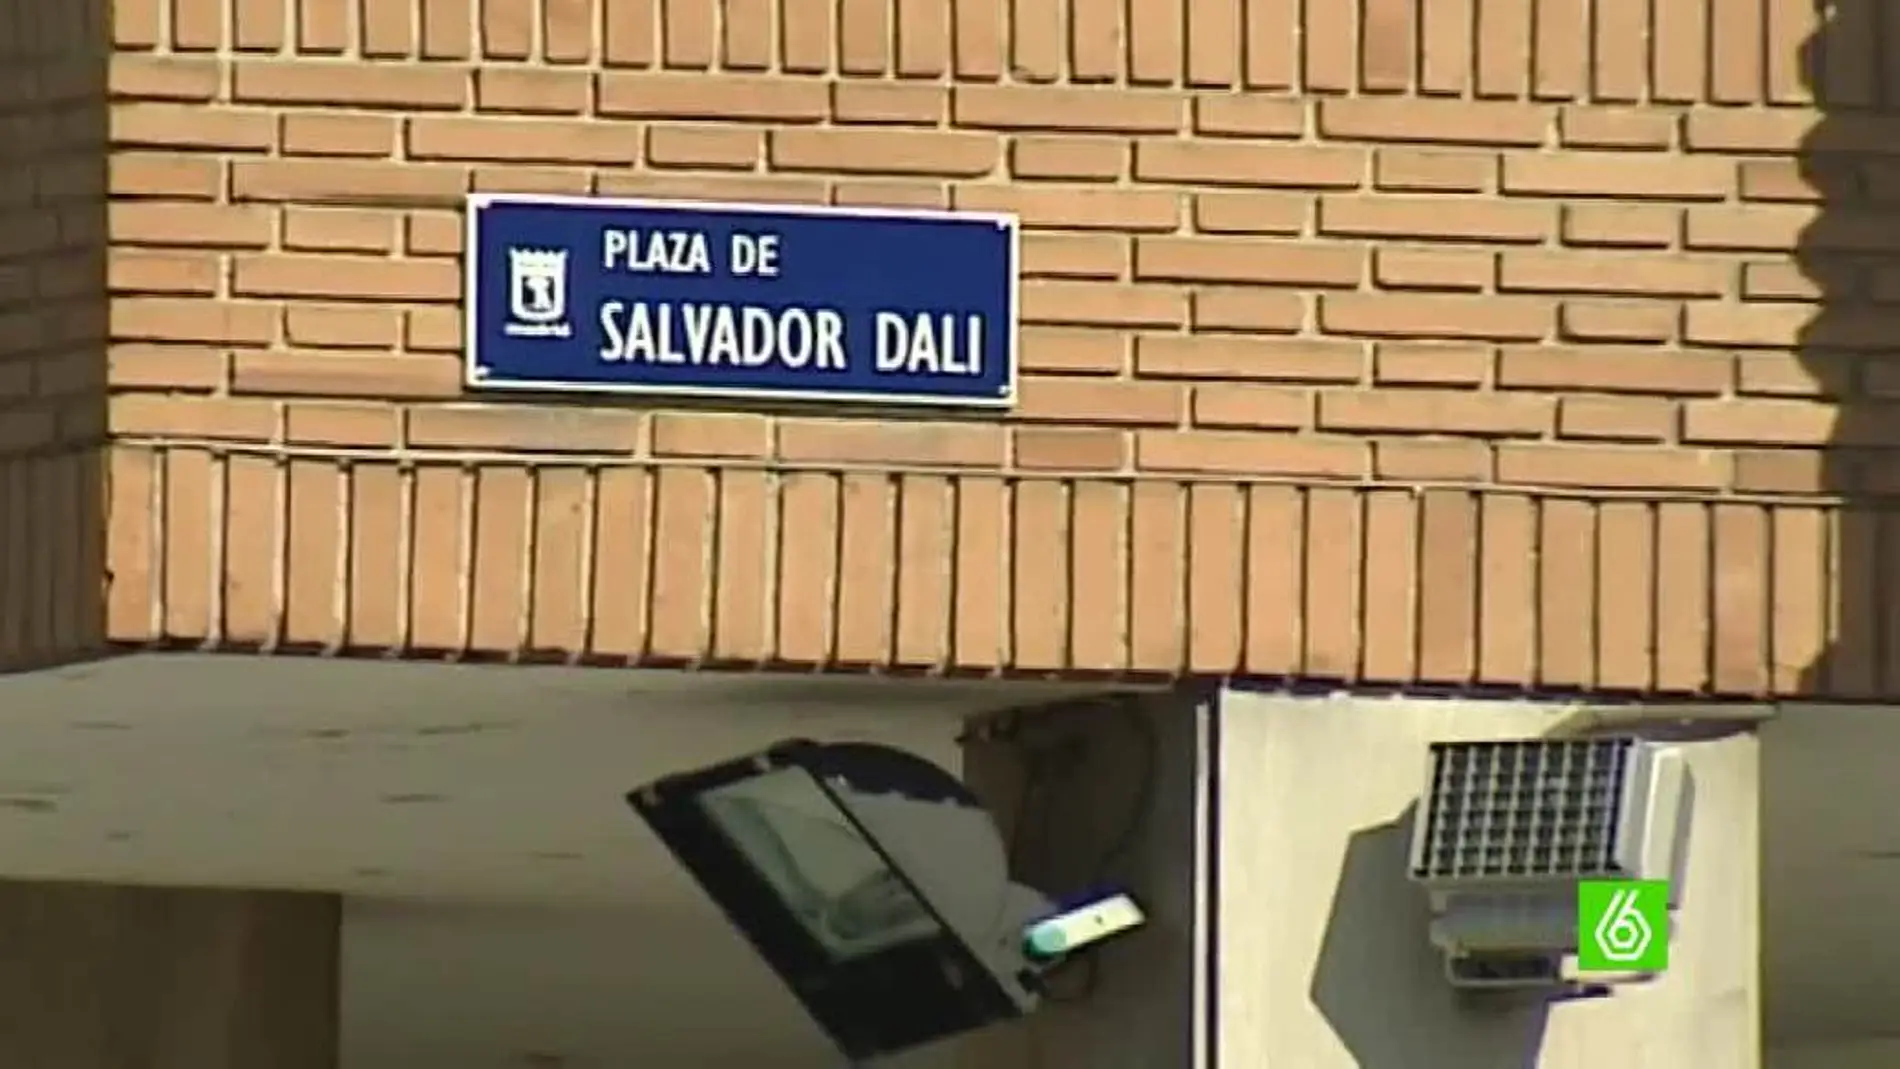 Plaza Salvador Dalí, Madrid